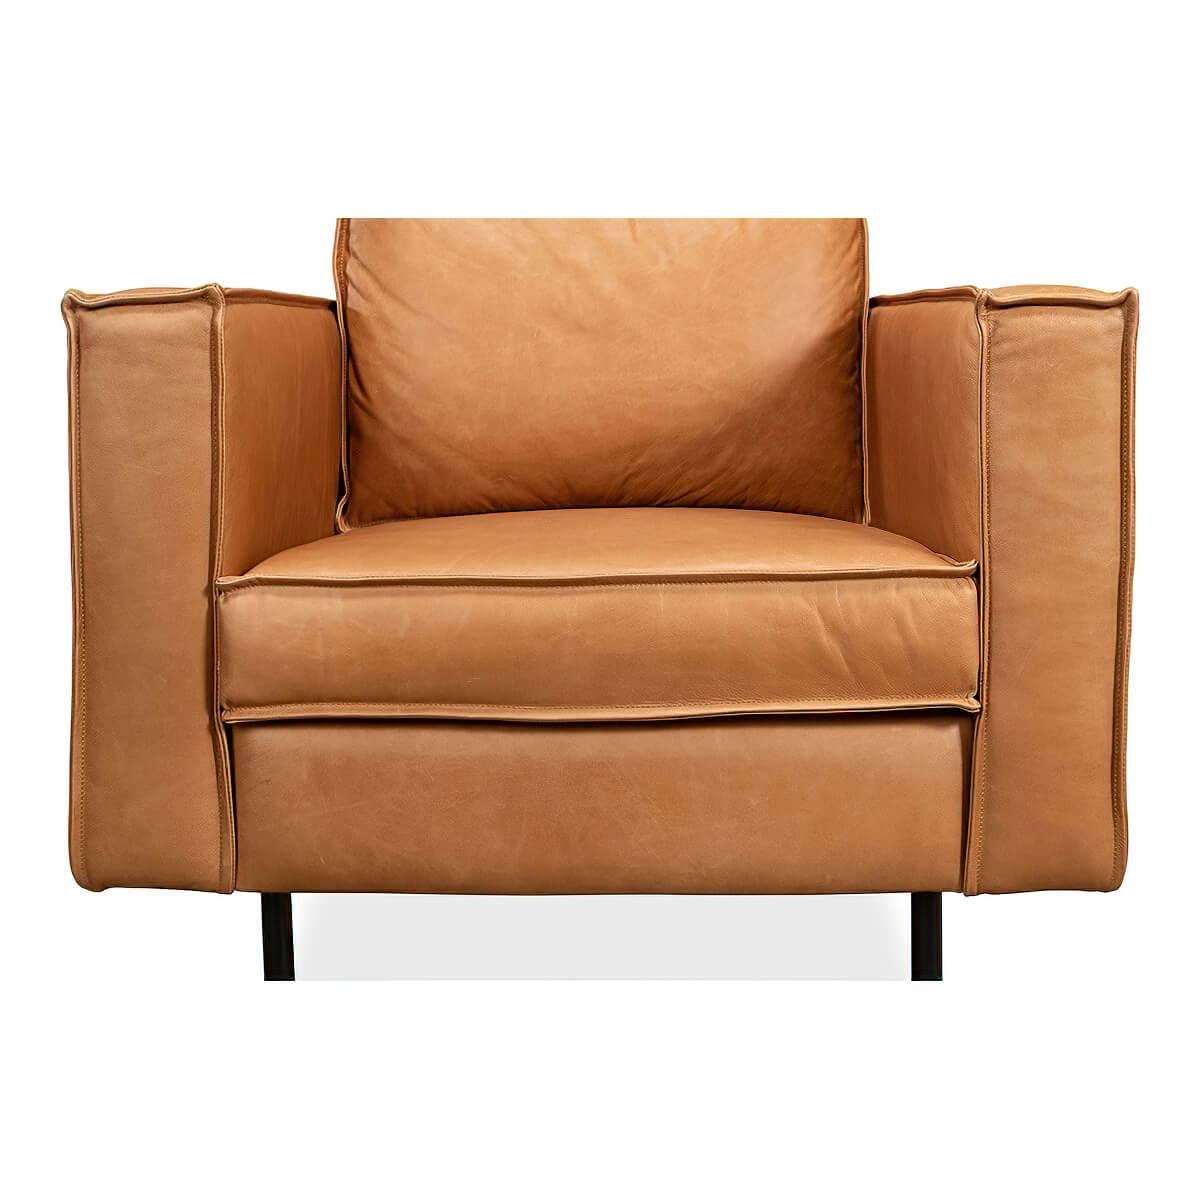 Asian Modern Leather Club Chair